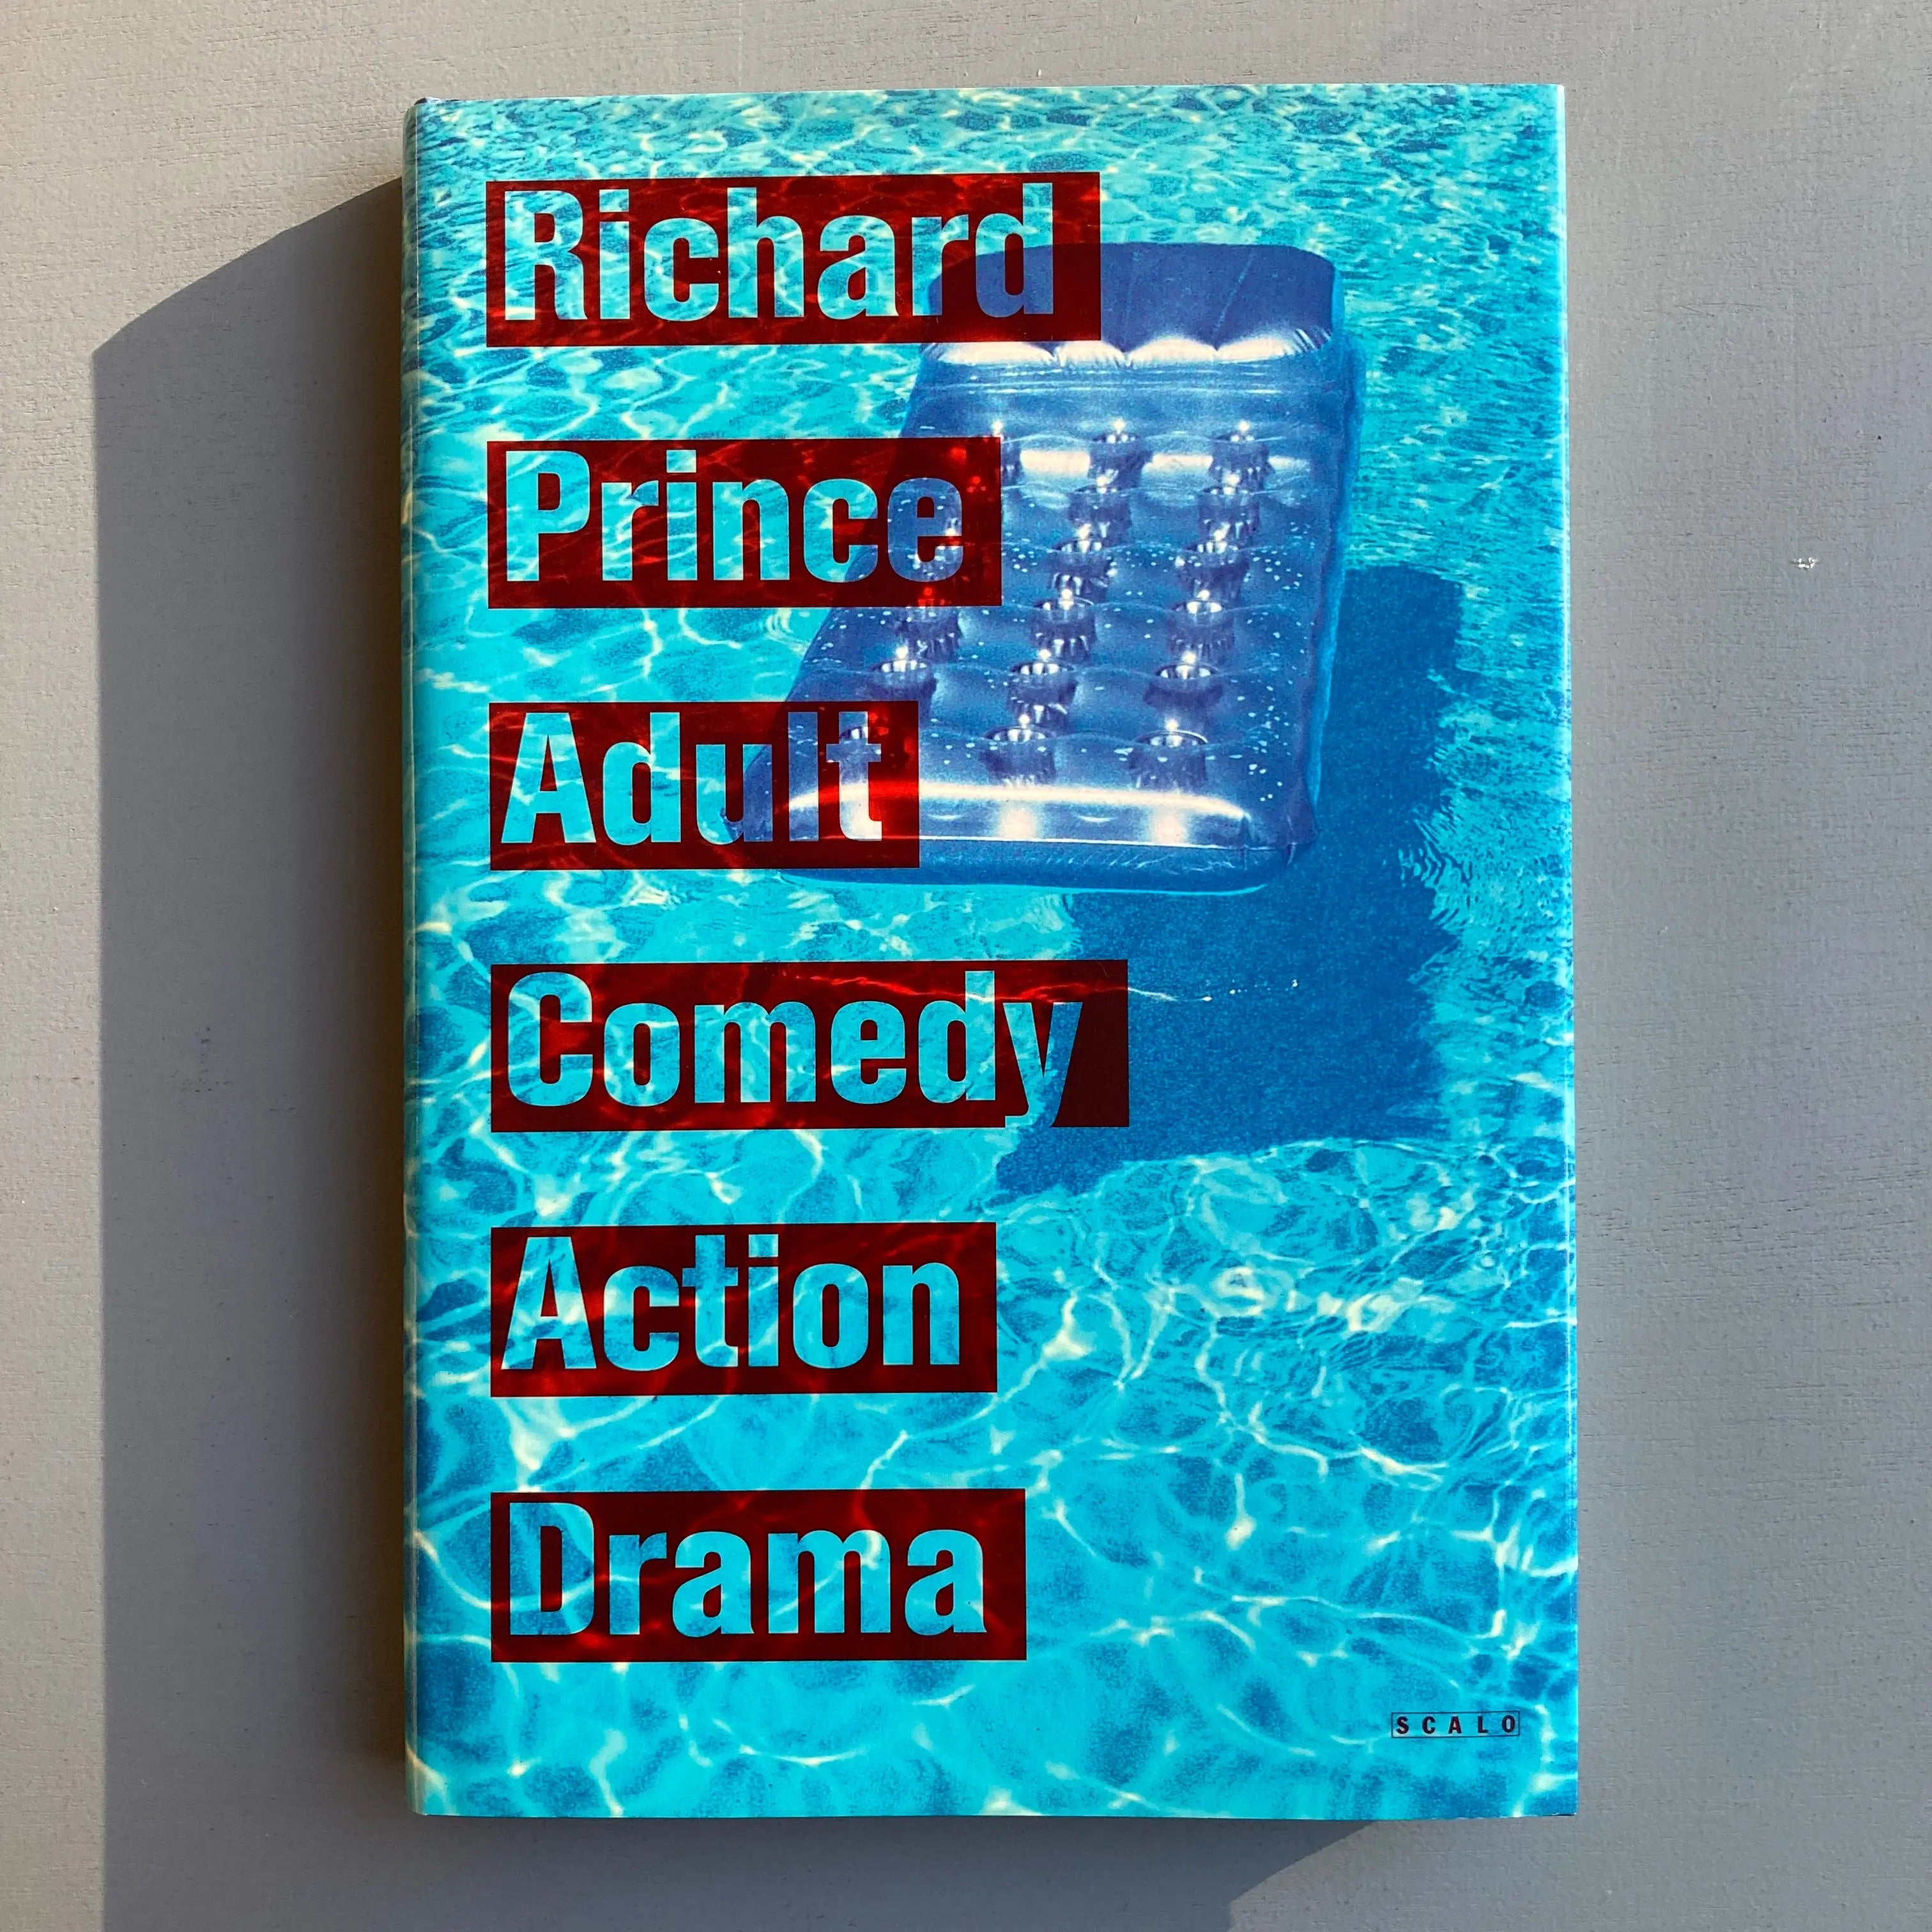 Richard Prince - Adult Comedy Action Drama - Scalo 1995 - Saint 